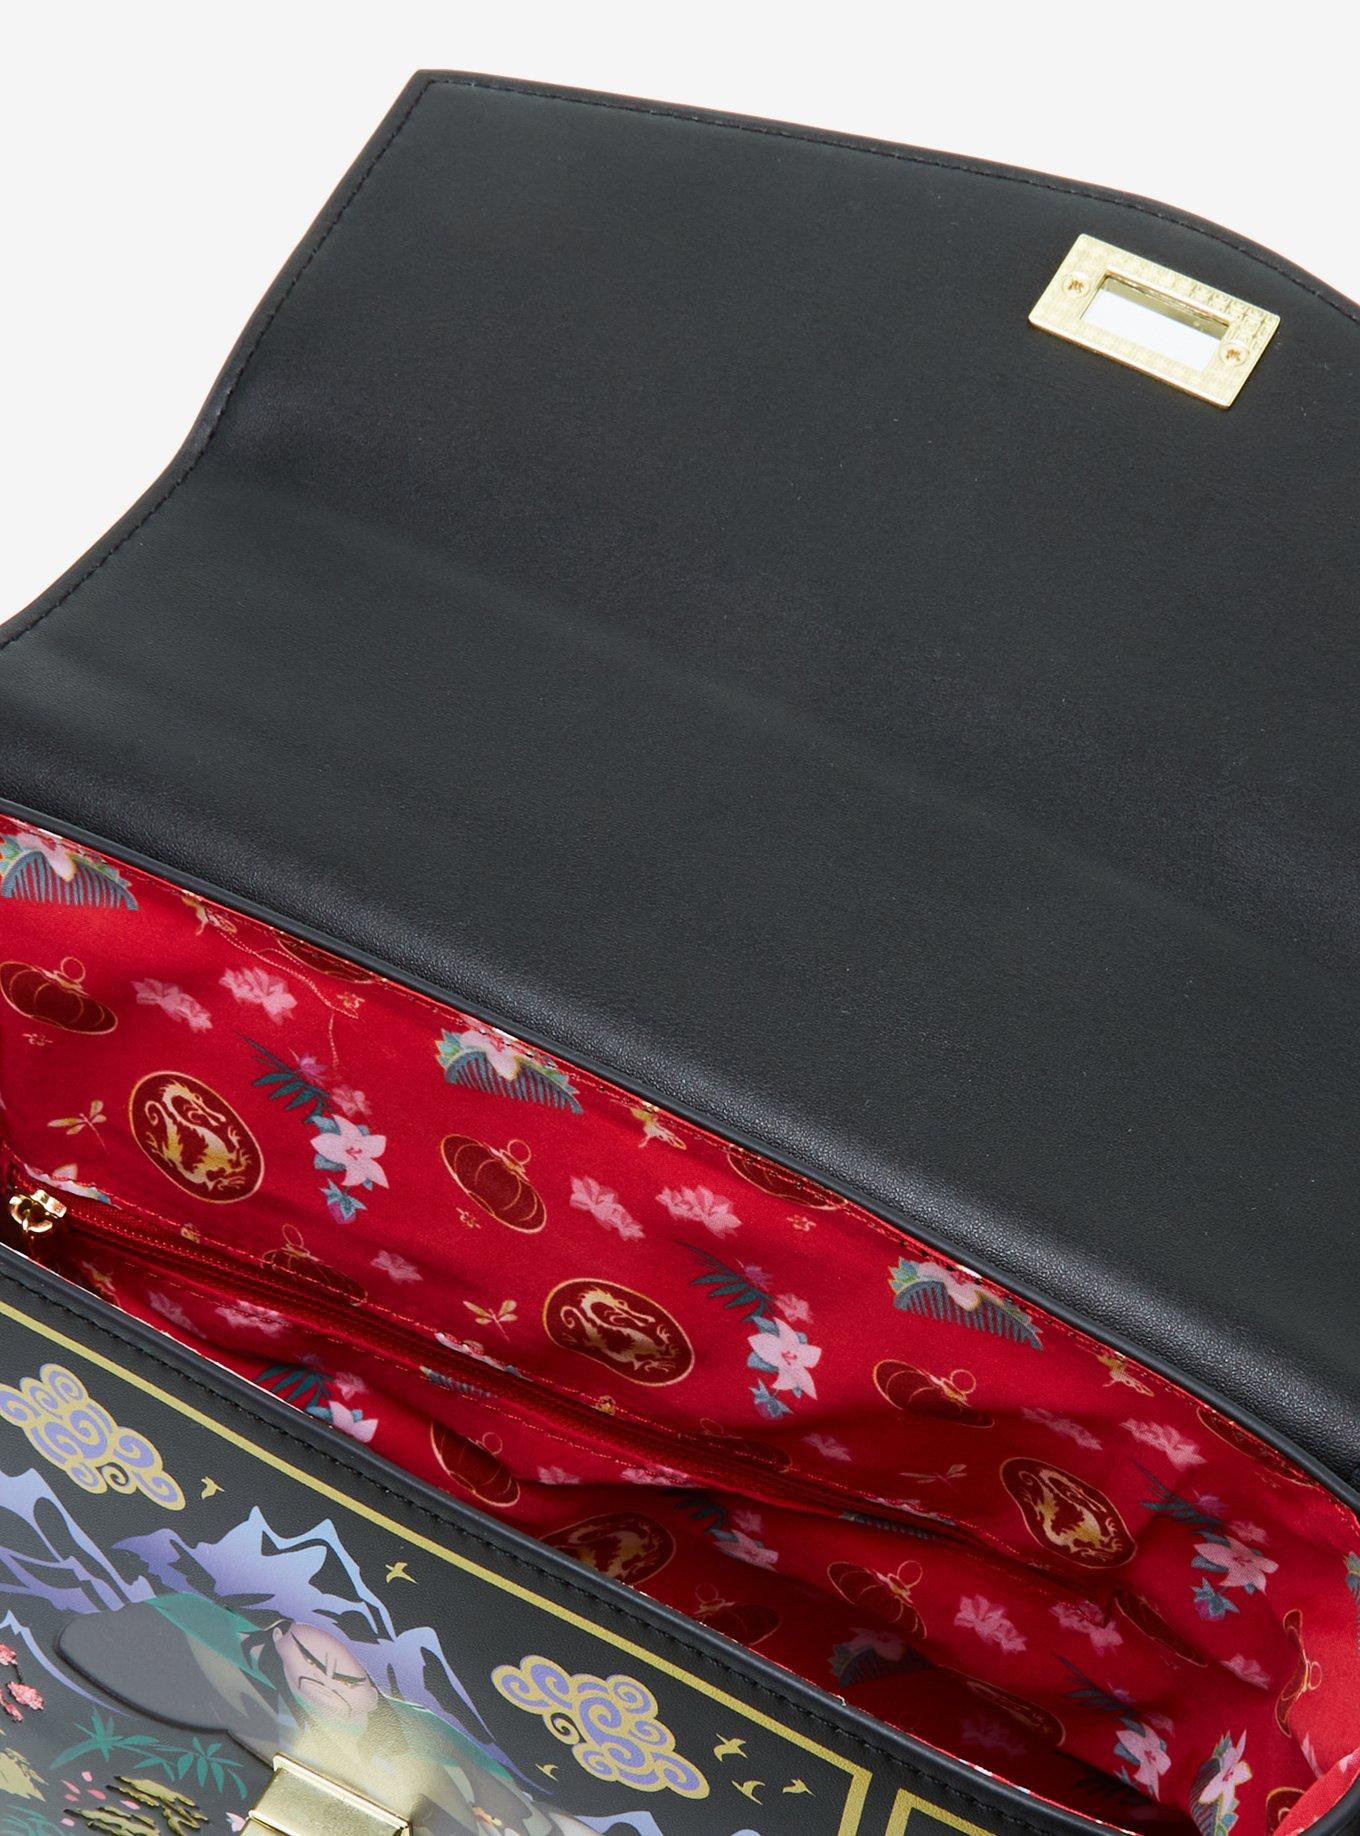 Loungefly Disney Mulan Icons Handbag - BoxLunch Exclusive, , alternate